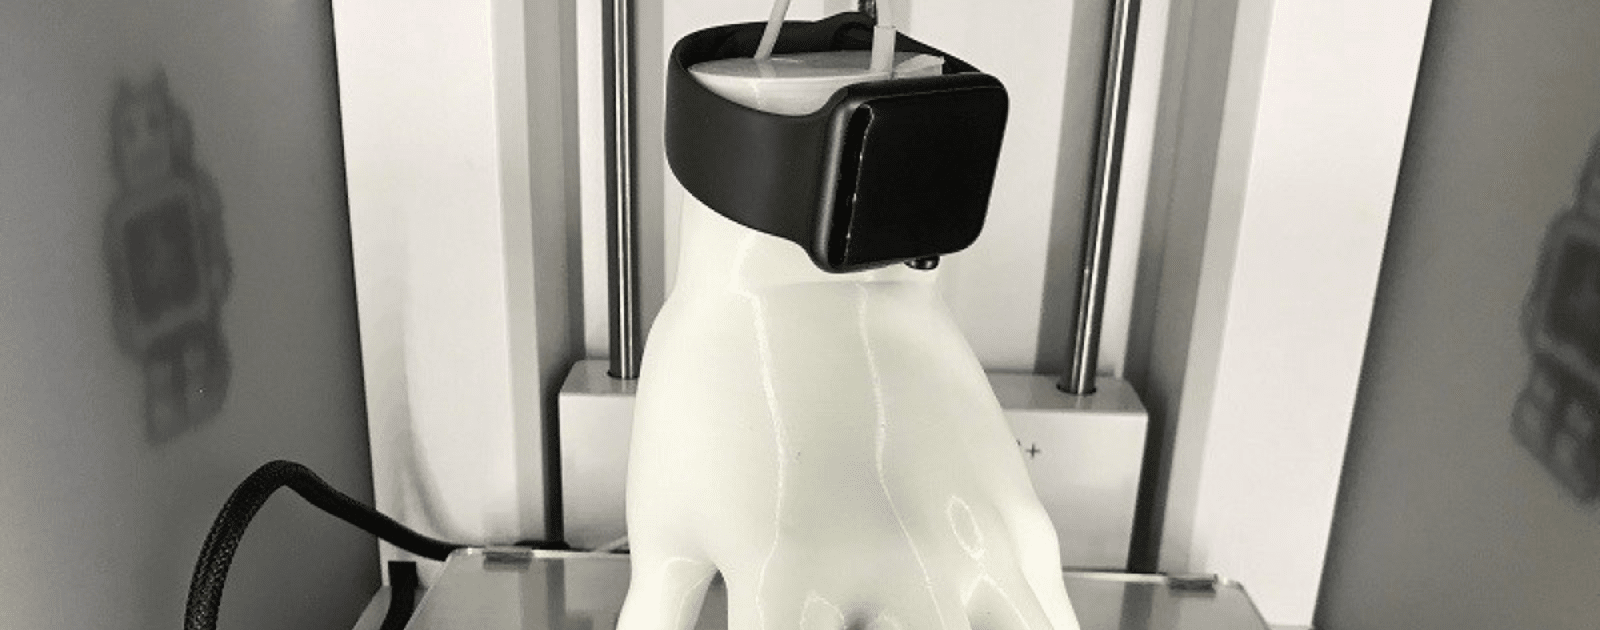 3D Print Thing Apple Watch Stand de la familia Addams